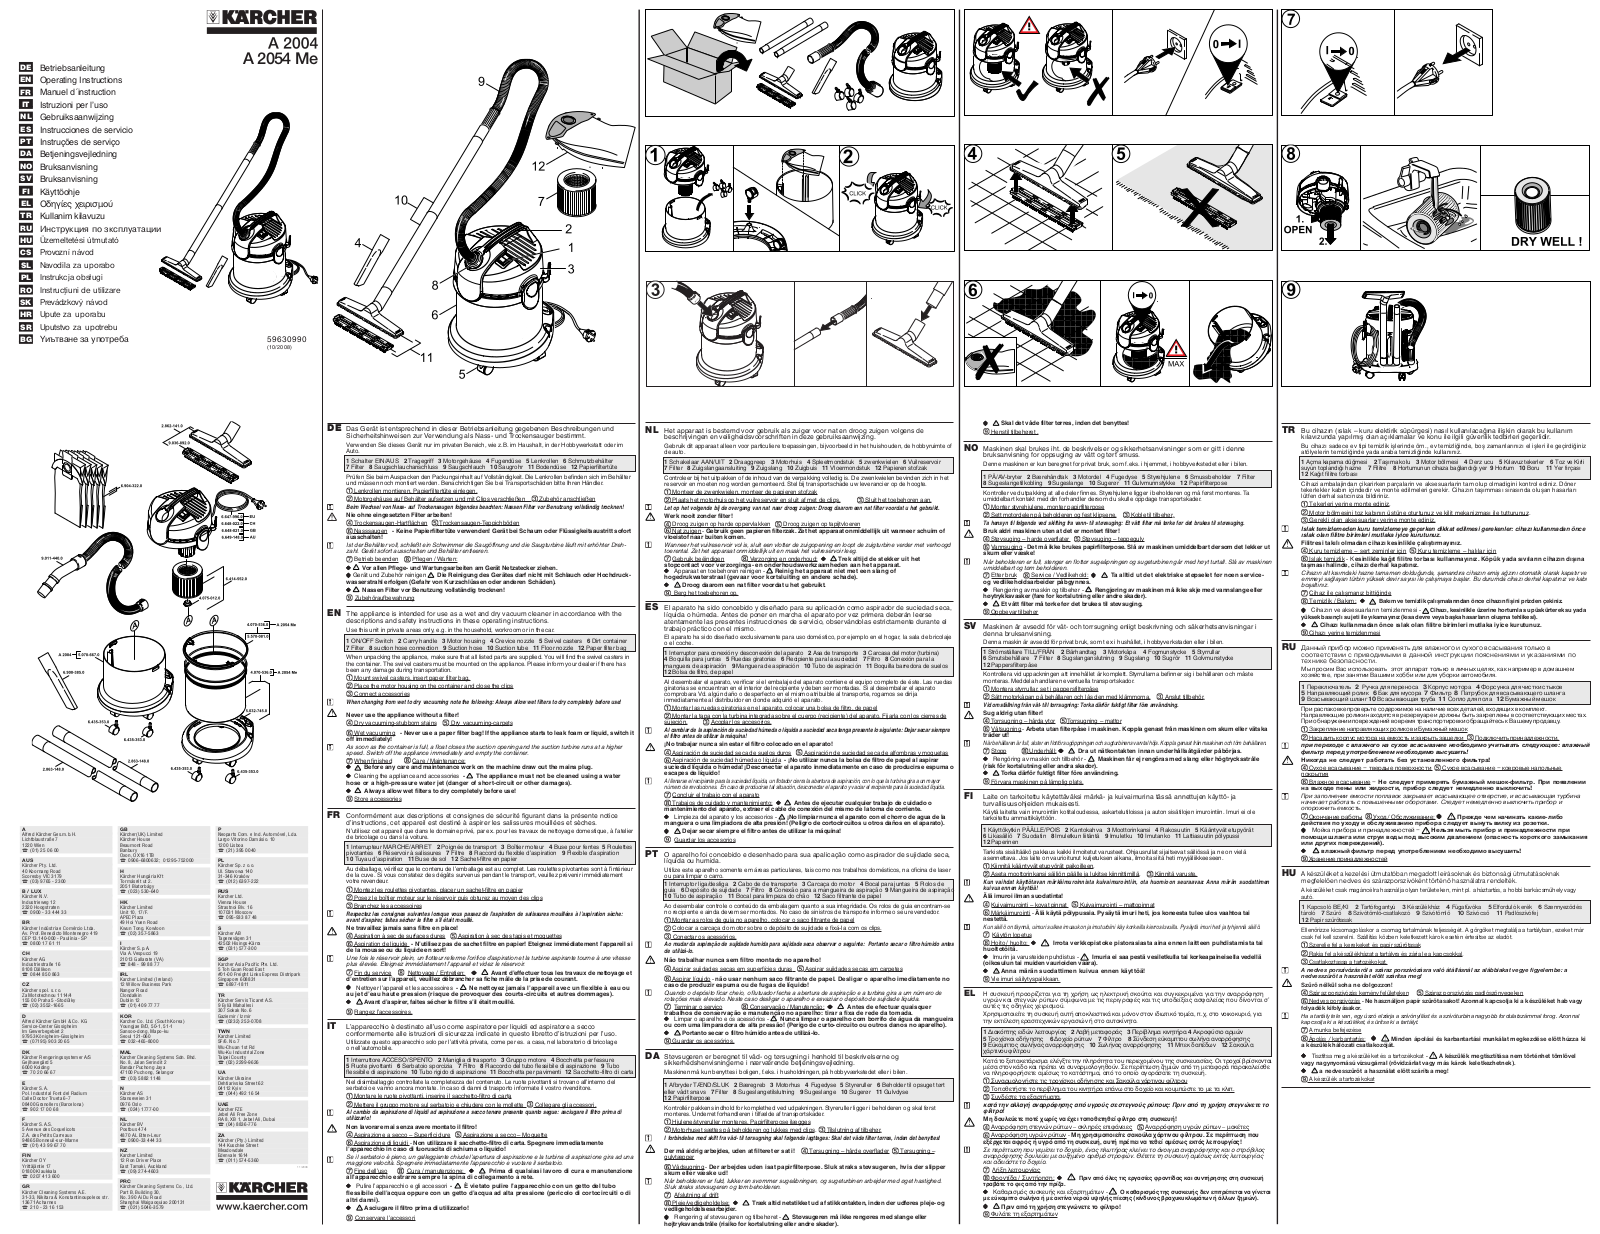 Karcher A 2004 User Manual